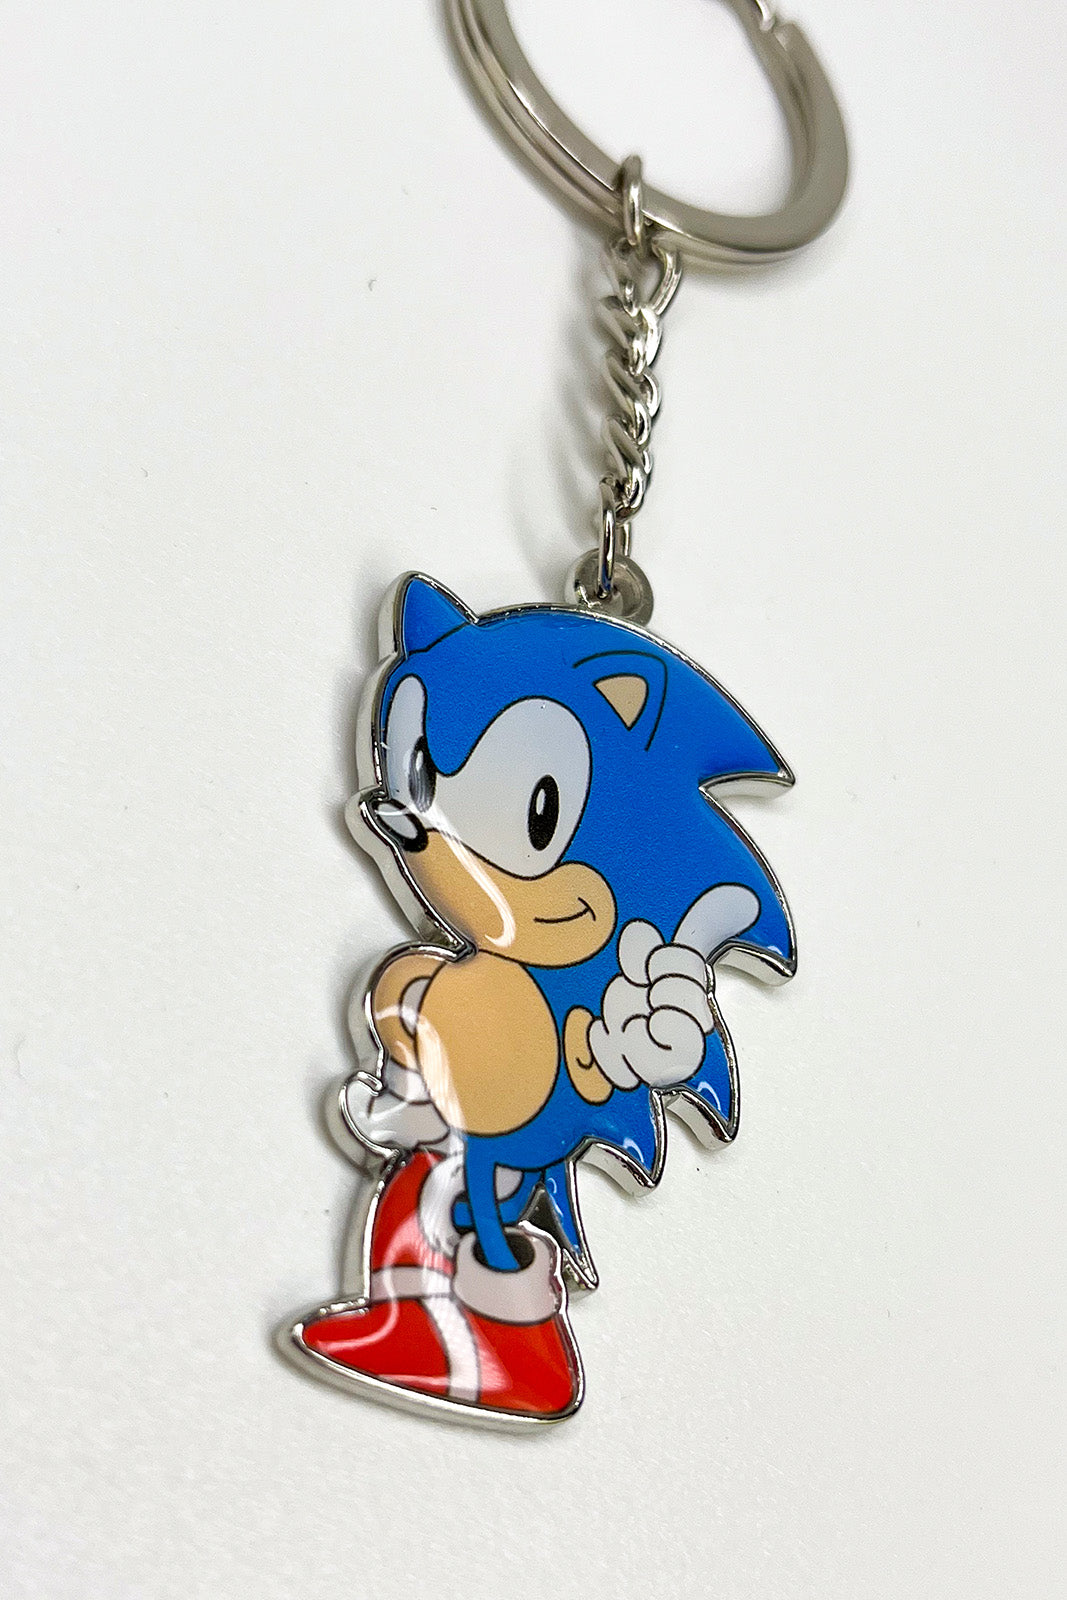 Sonic - Geschenkset - Trinkglas